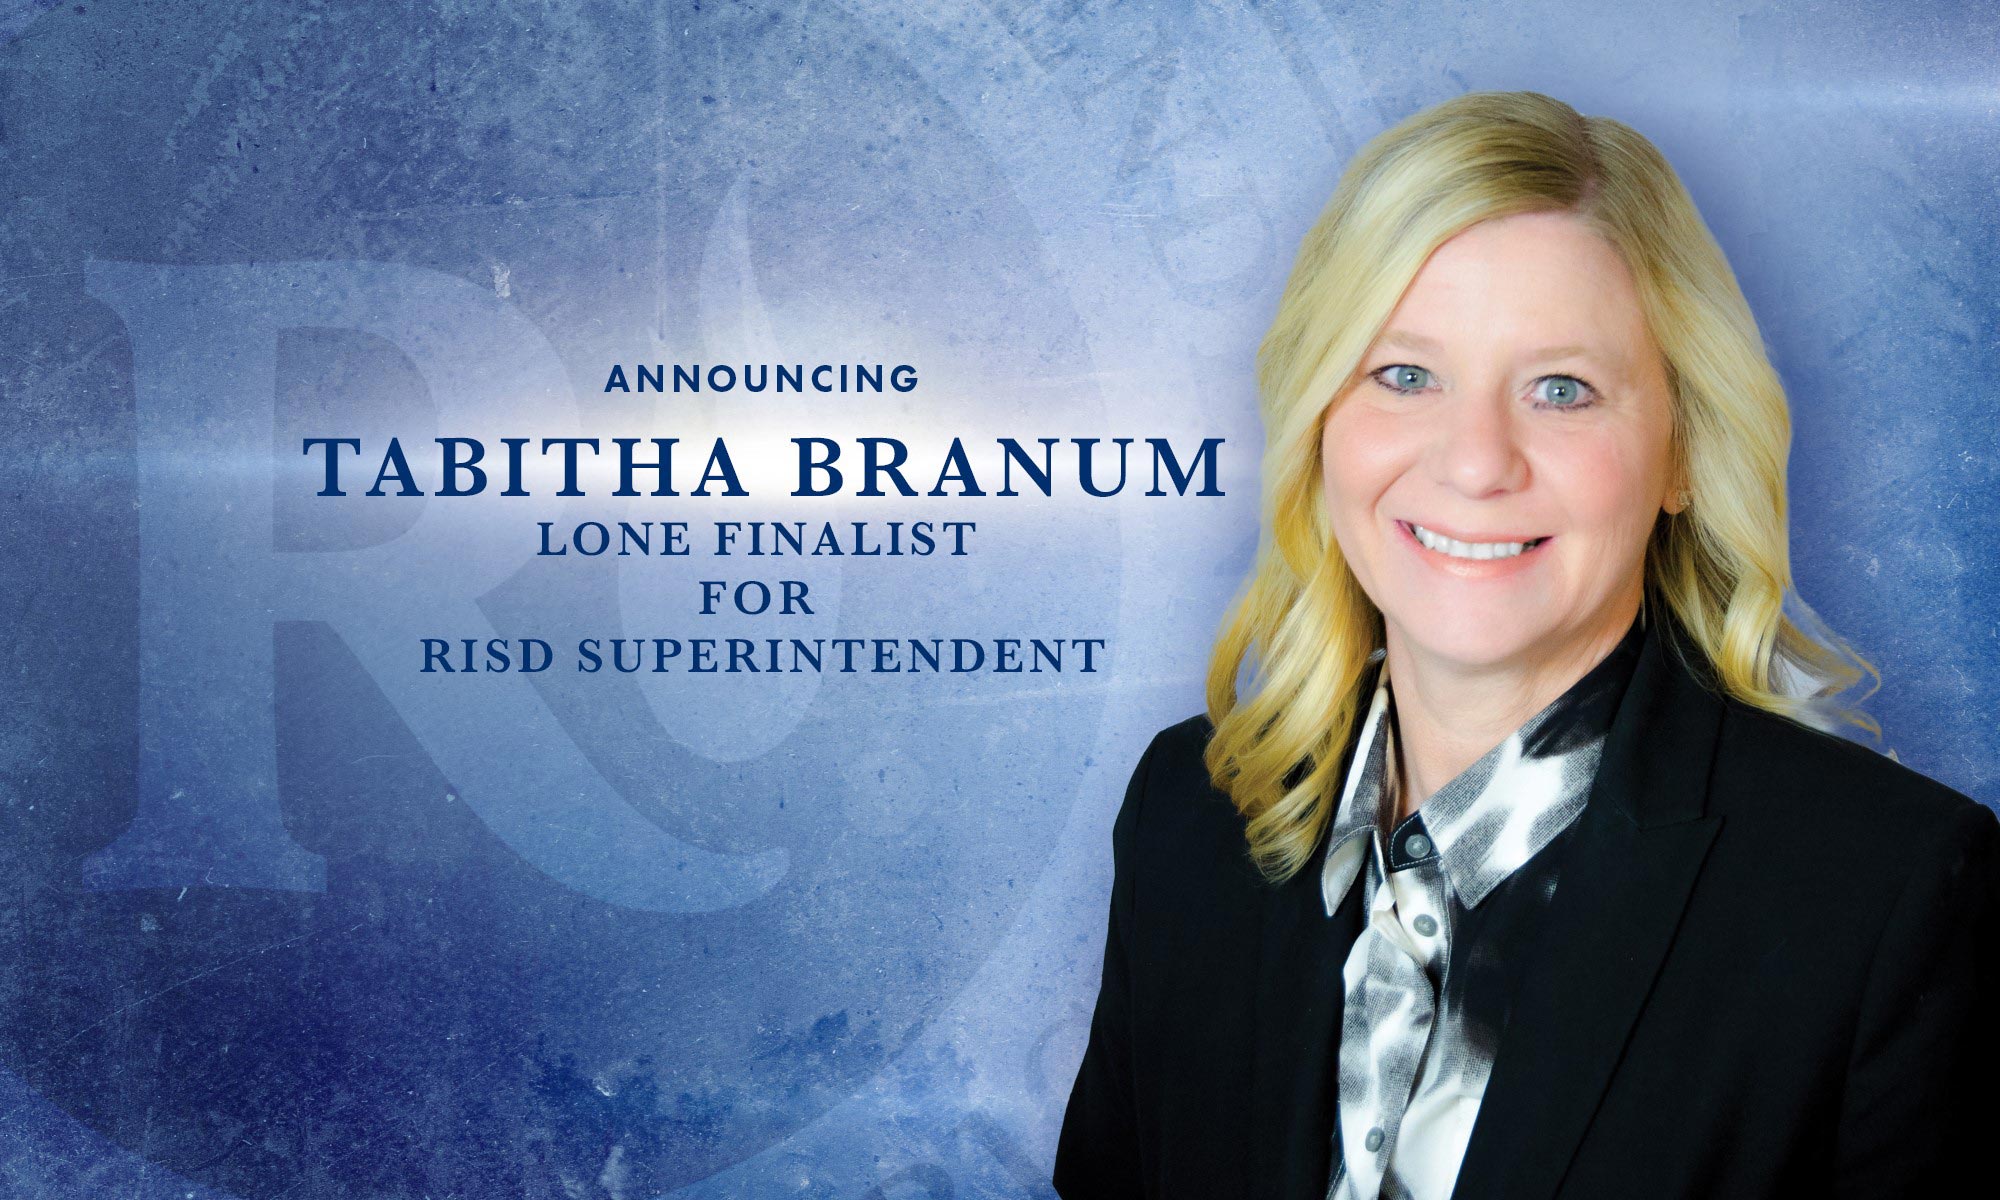 Tabitha Branum Lone finalist for RISD Superintendent